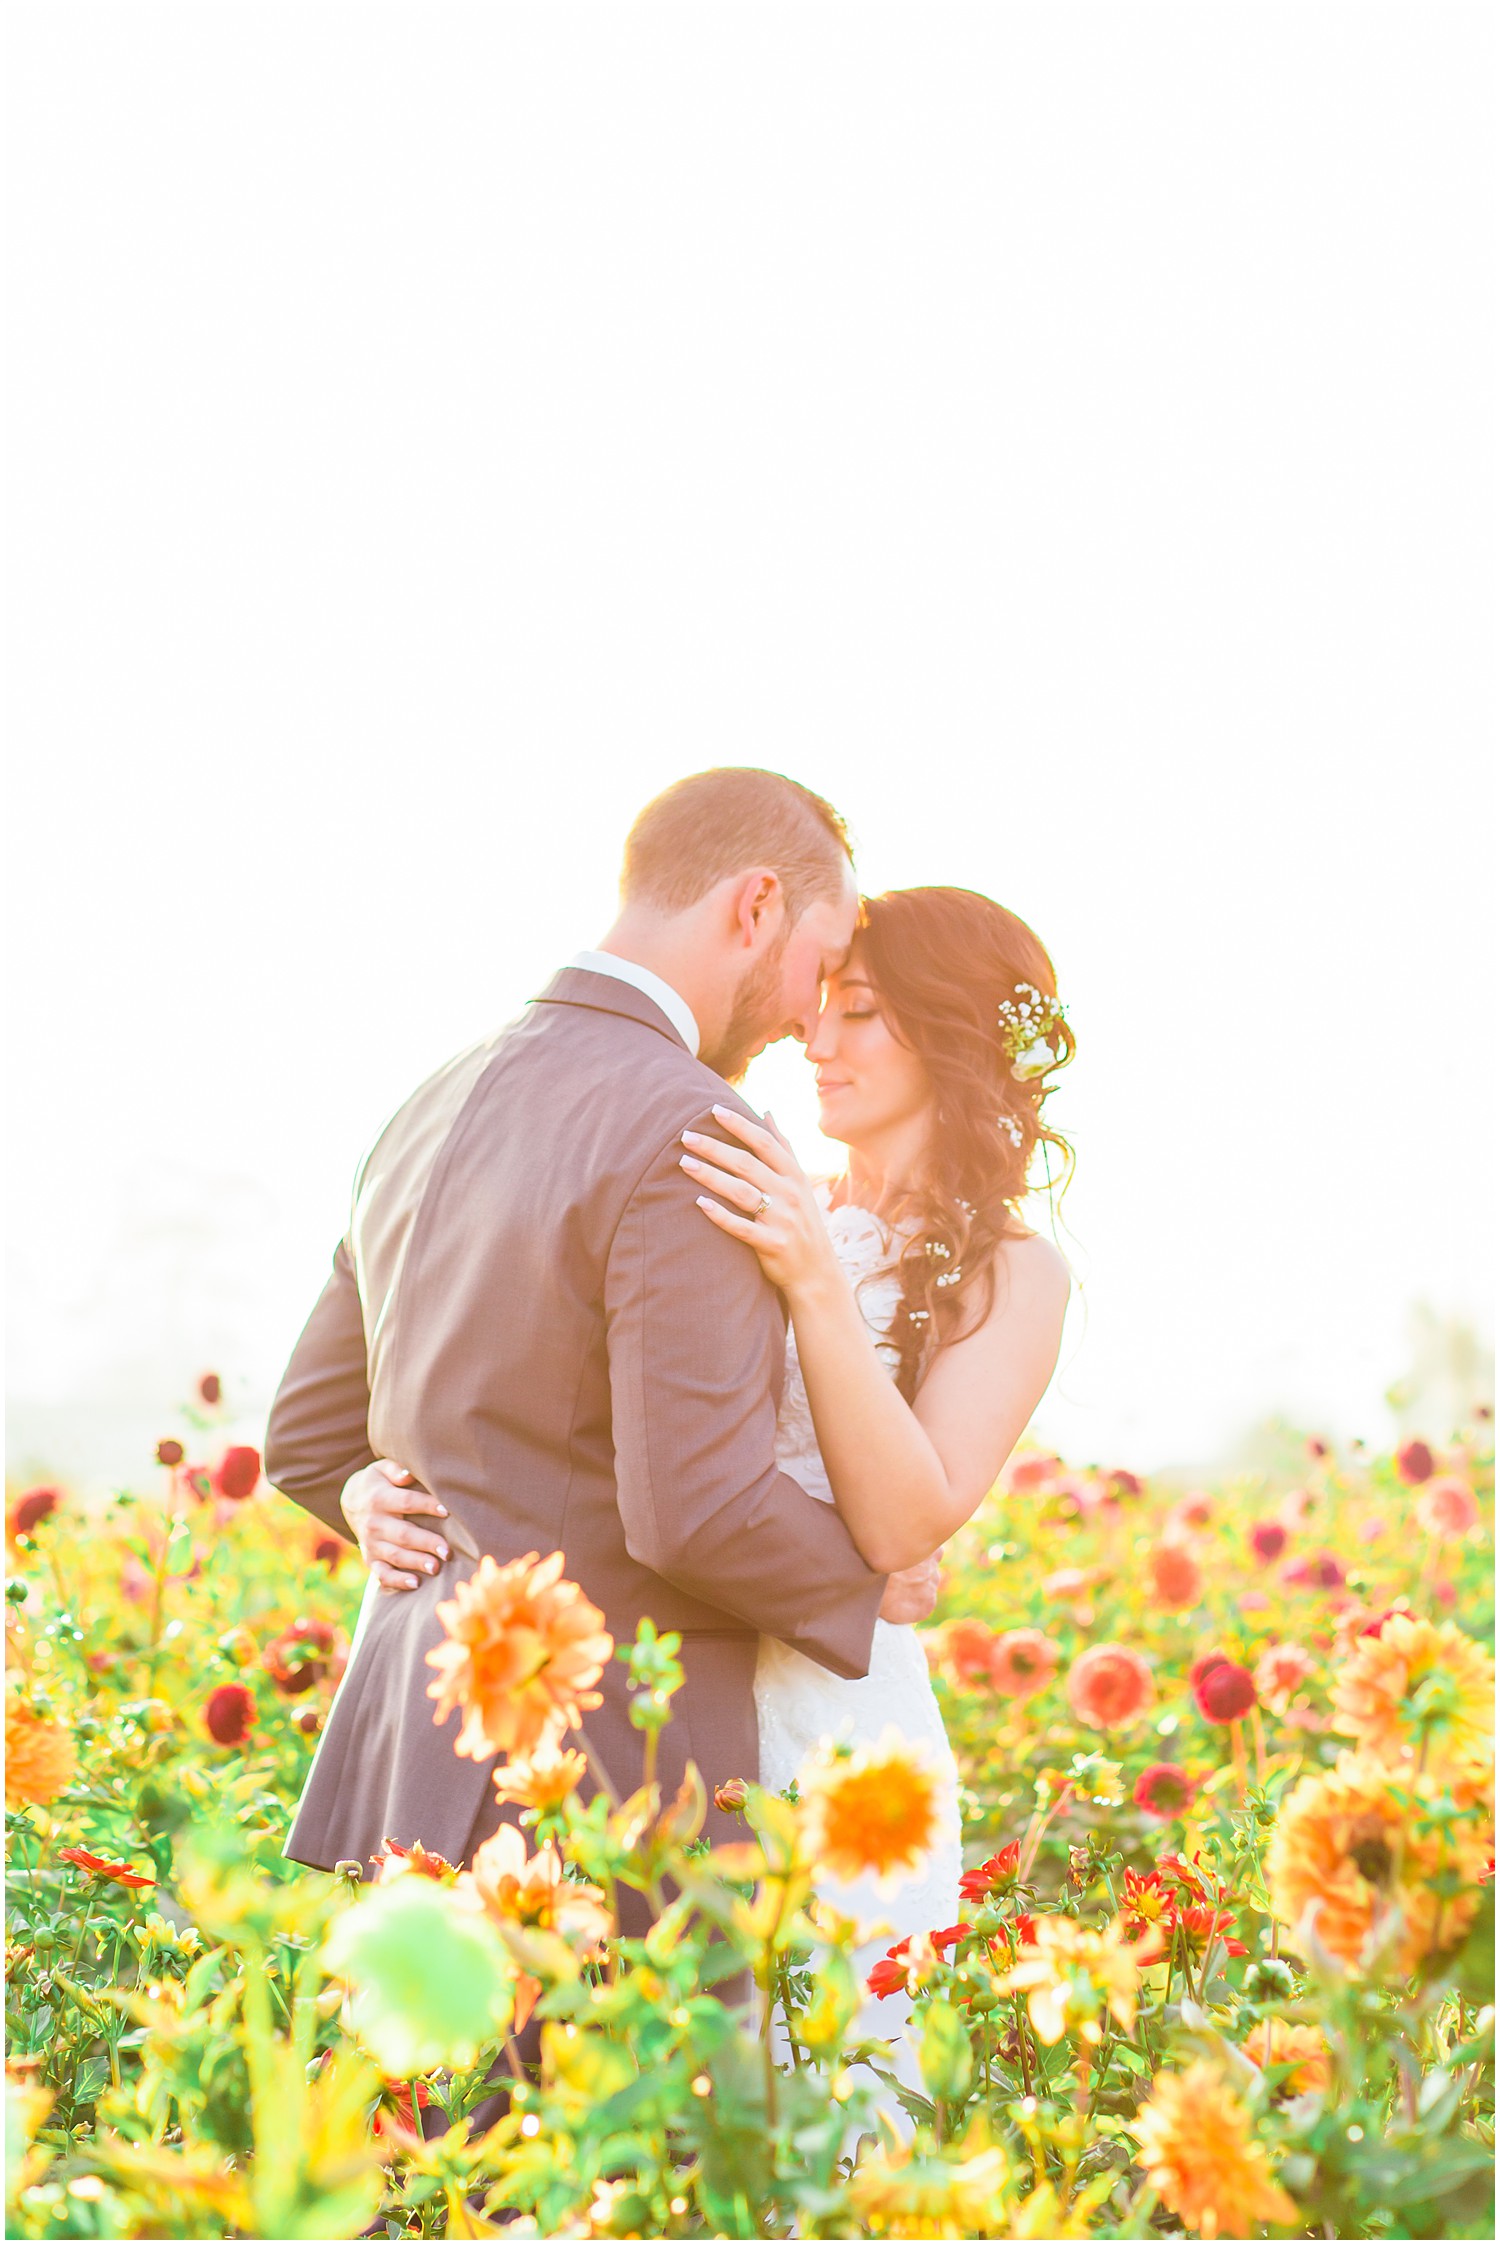 Autumn Dairyland Wedding | Cole & Ashley